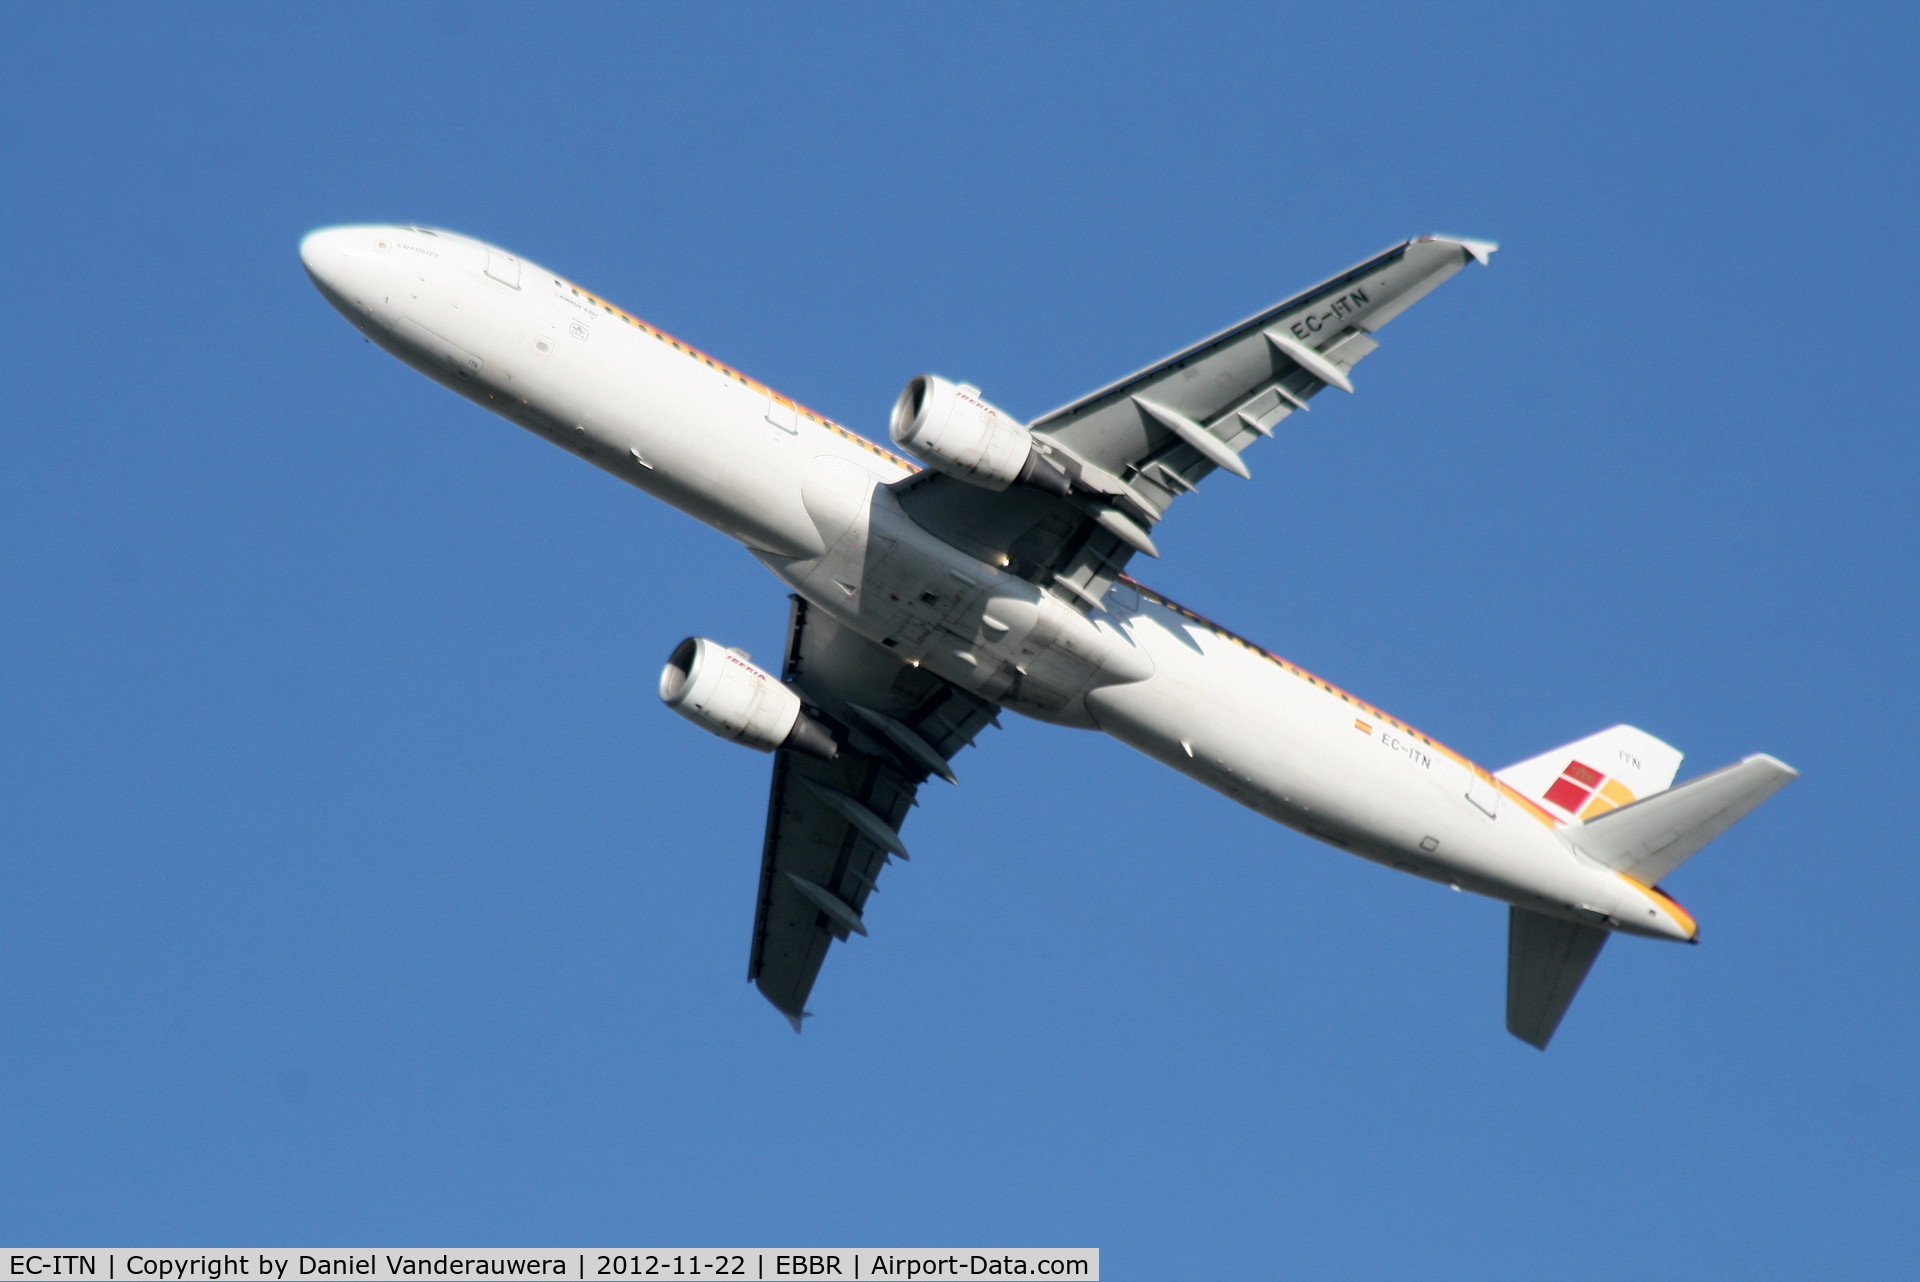 EC-ITN, 2003 Airbus A321-212 C/N 2115, Flight IB3203 is climbing from RWY 25R